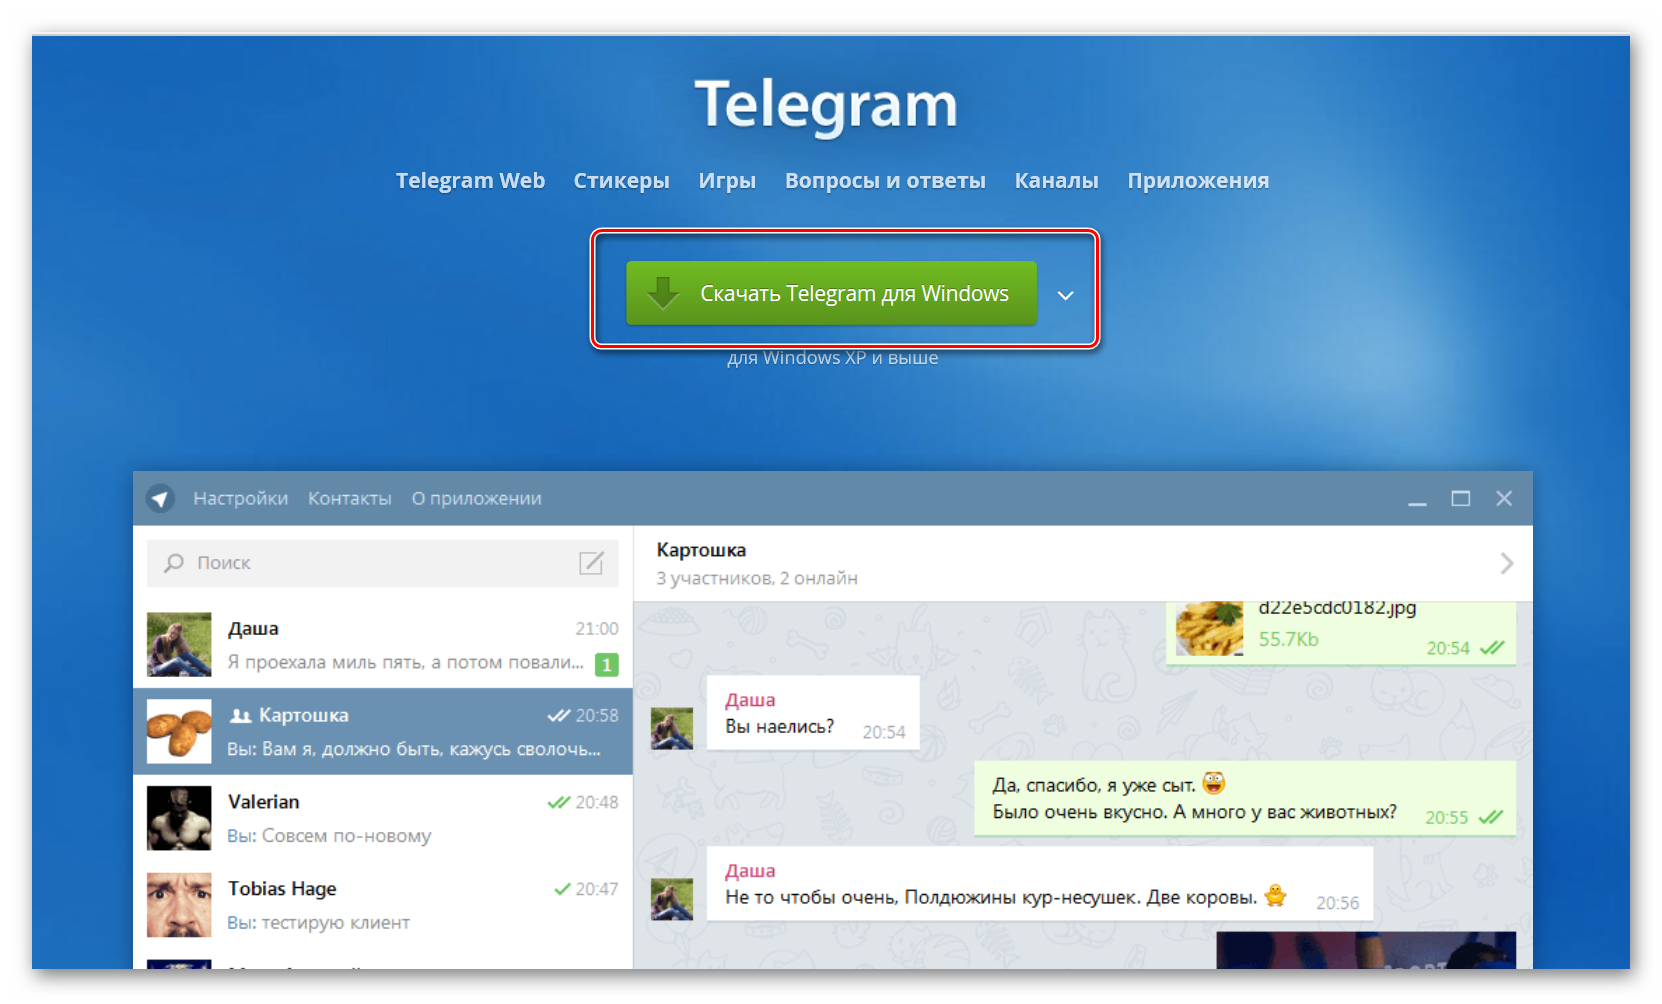 Https telegram login. Telegram profil. Профиль в телеграмме. Телеграмм web. Веб приложение в телеграм.